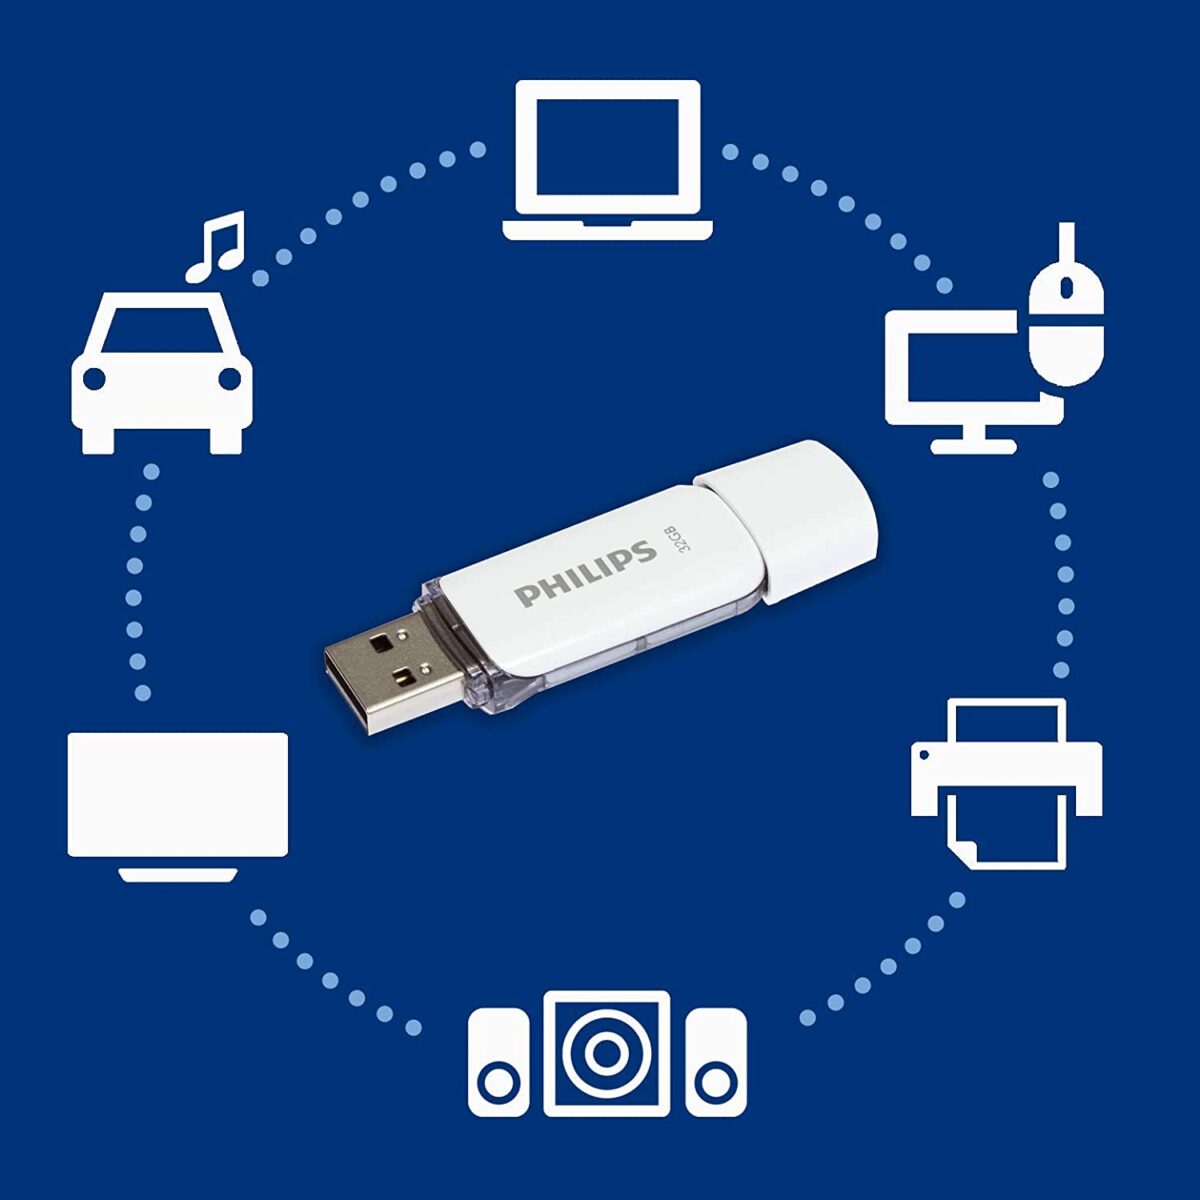 Philips USB Flash Memory USB 2.0 32GB Snow Edition Grey